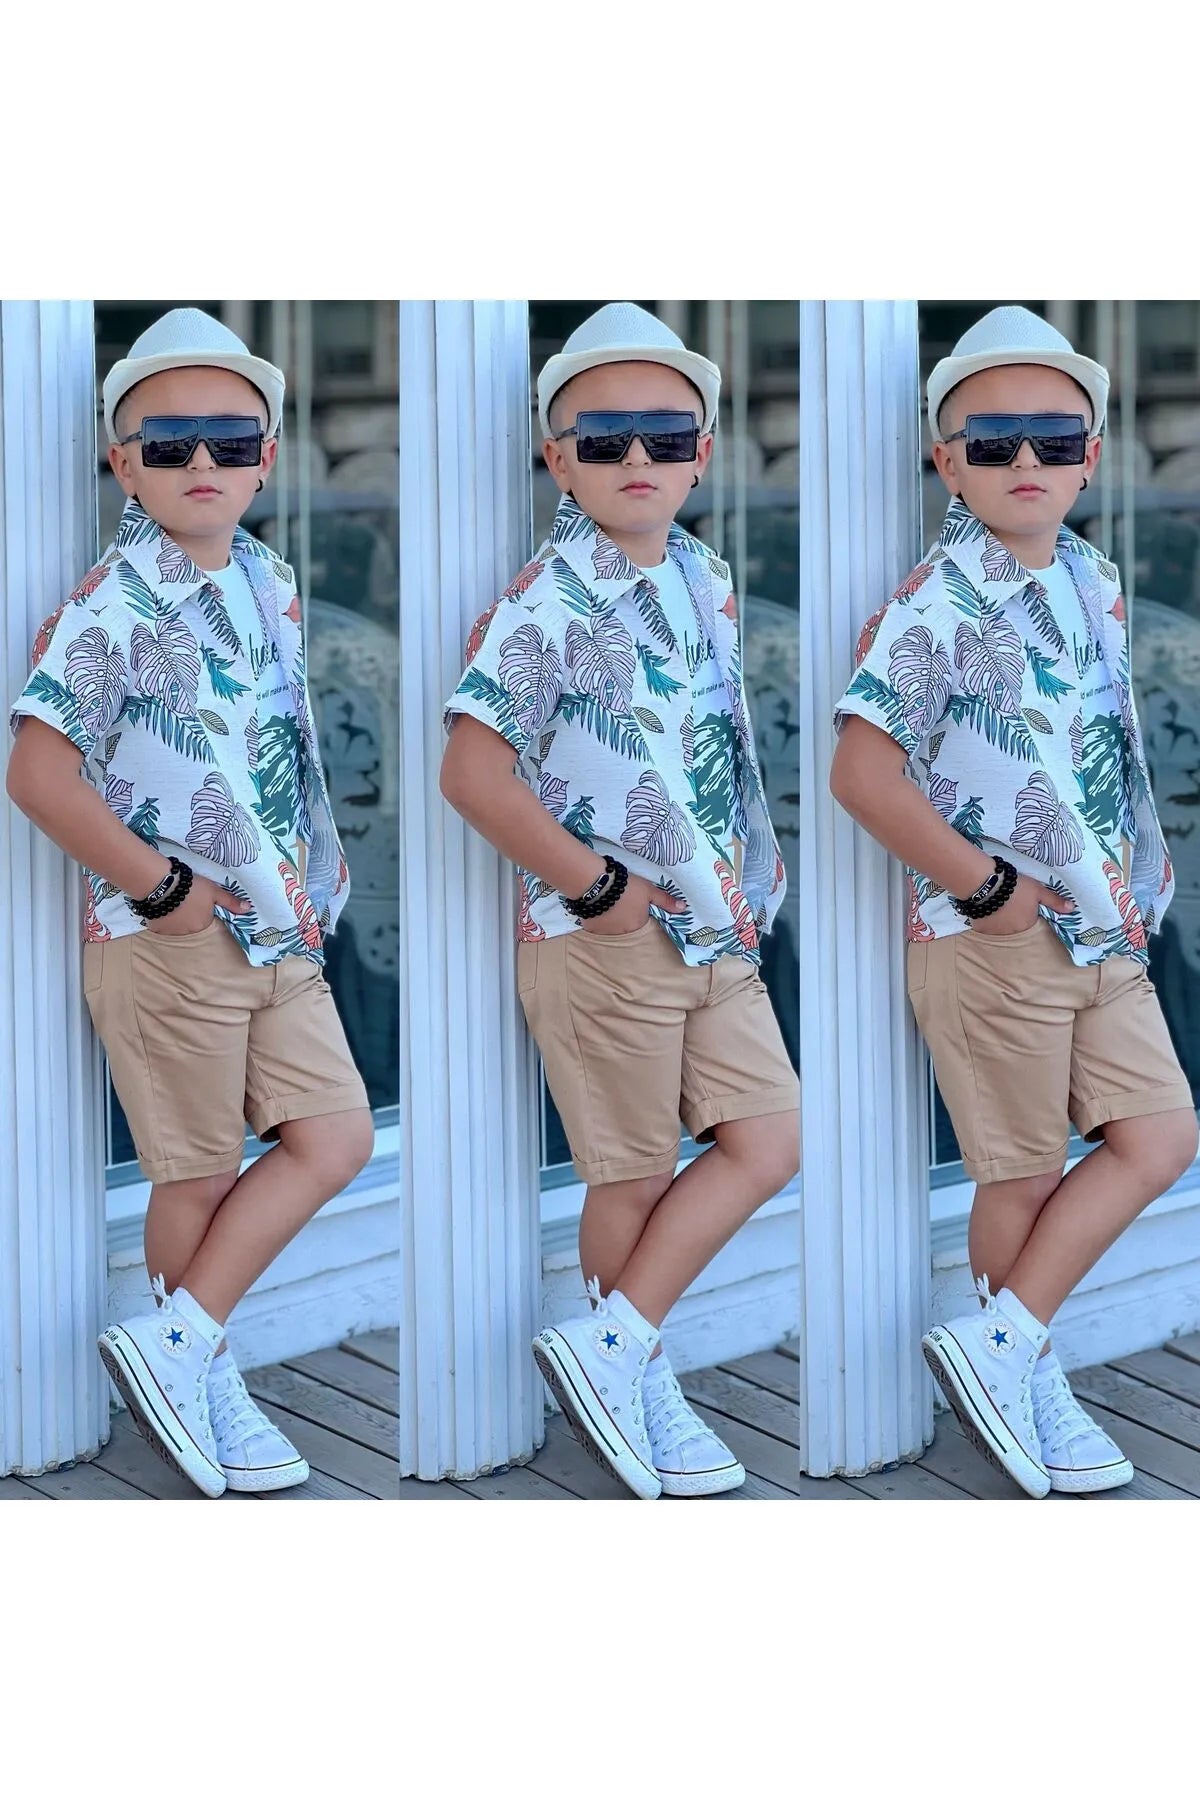 Alpids Boy's 4 Pcs  With Straw Hat Sets